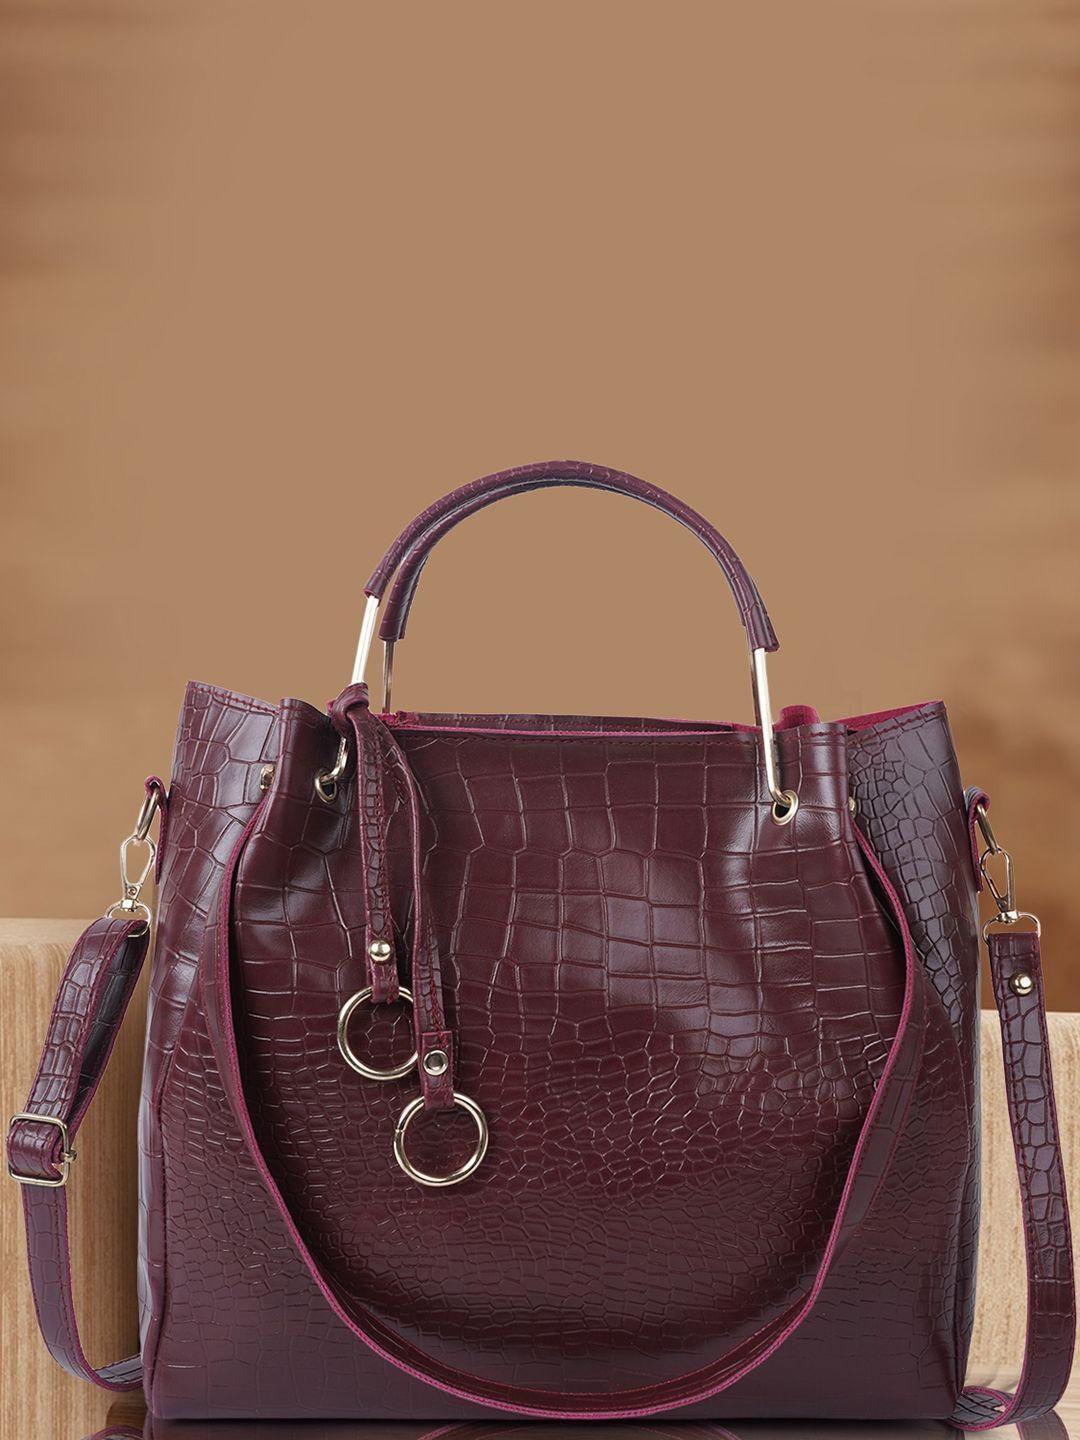 dressberry maroon textured structured handheld bag with tasselled